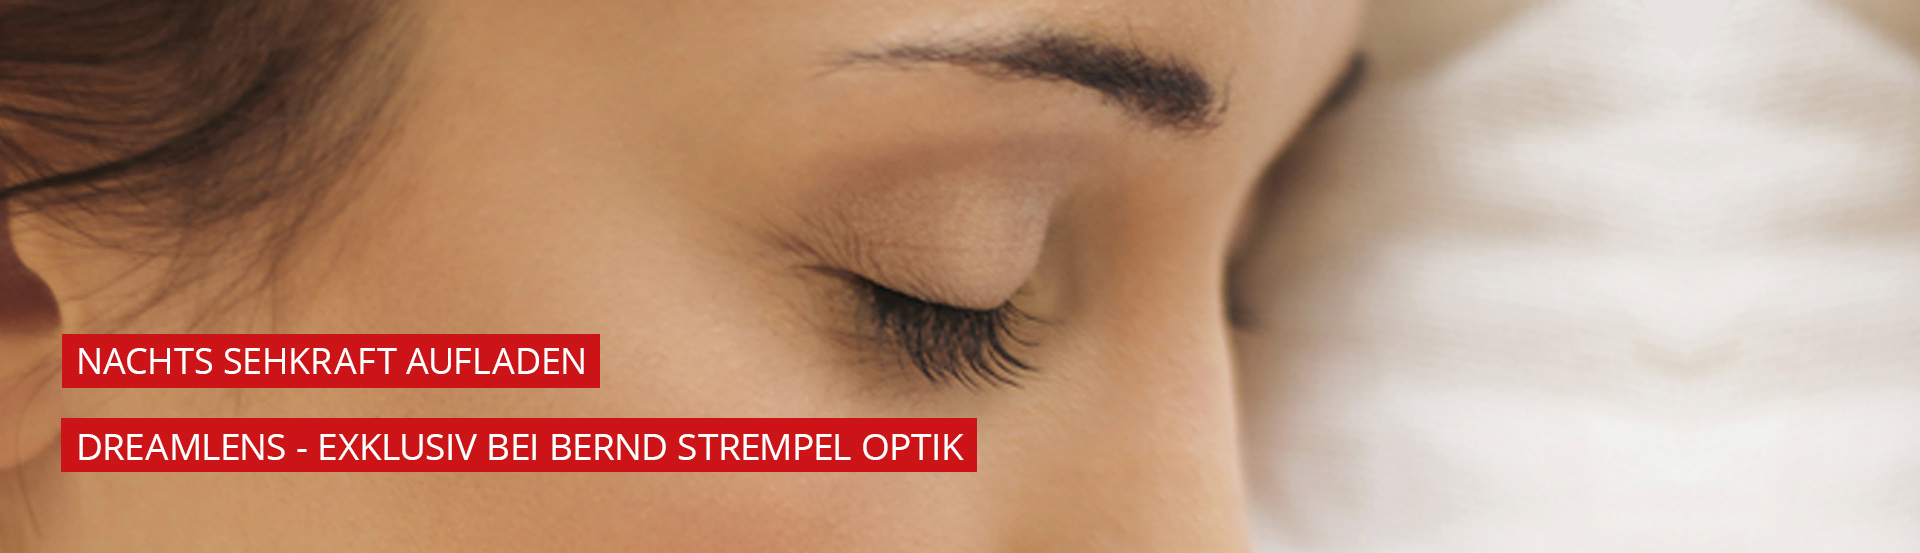 Nachtlinsen (Orthokeratologie) - exklusiv bei Bernd Strempel Optik